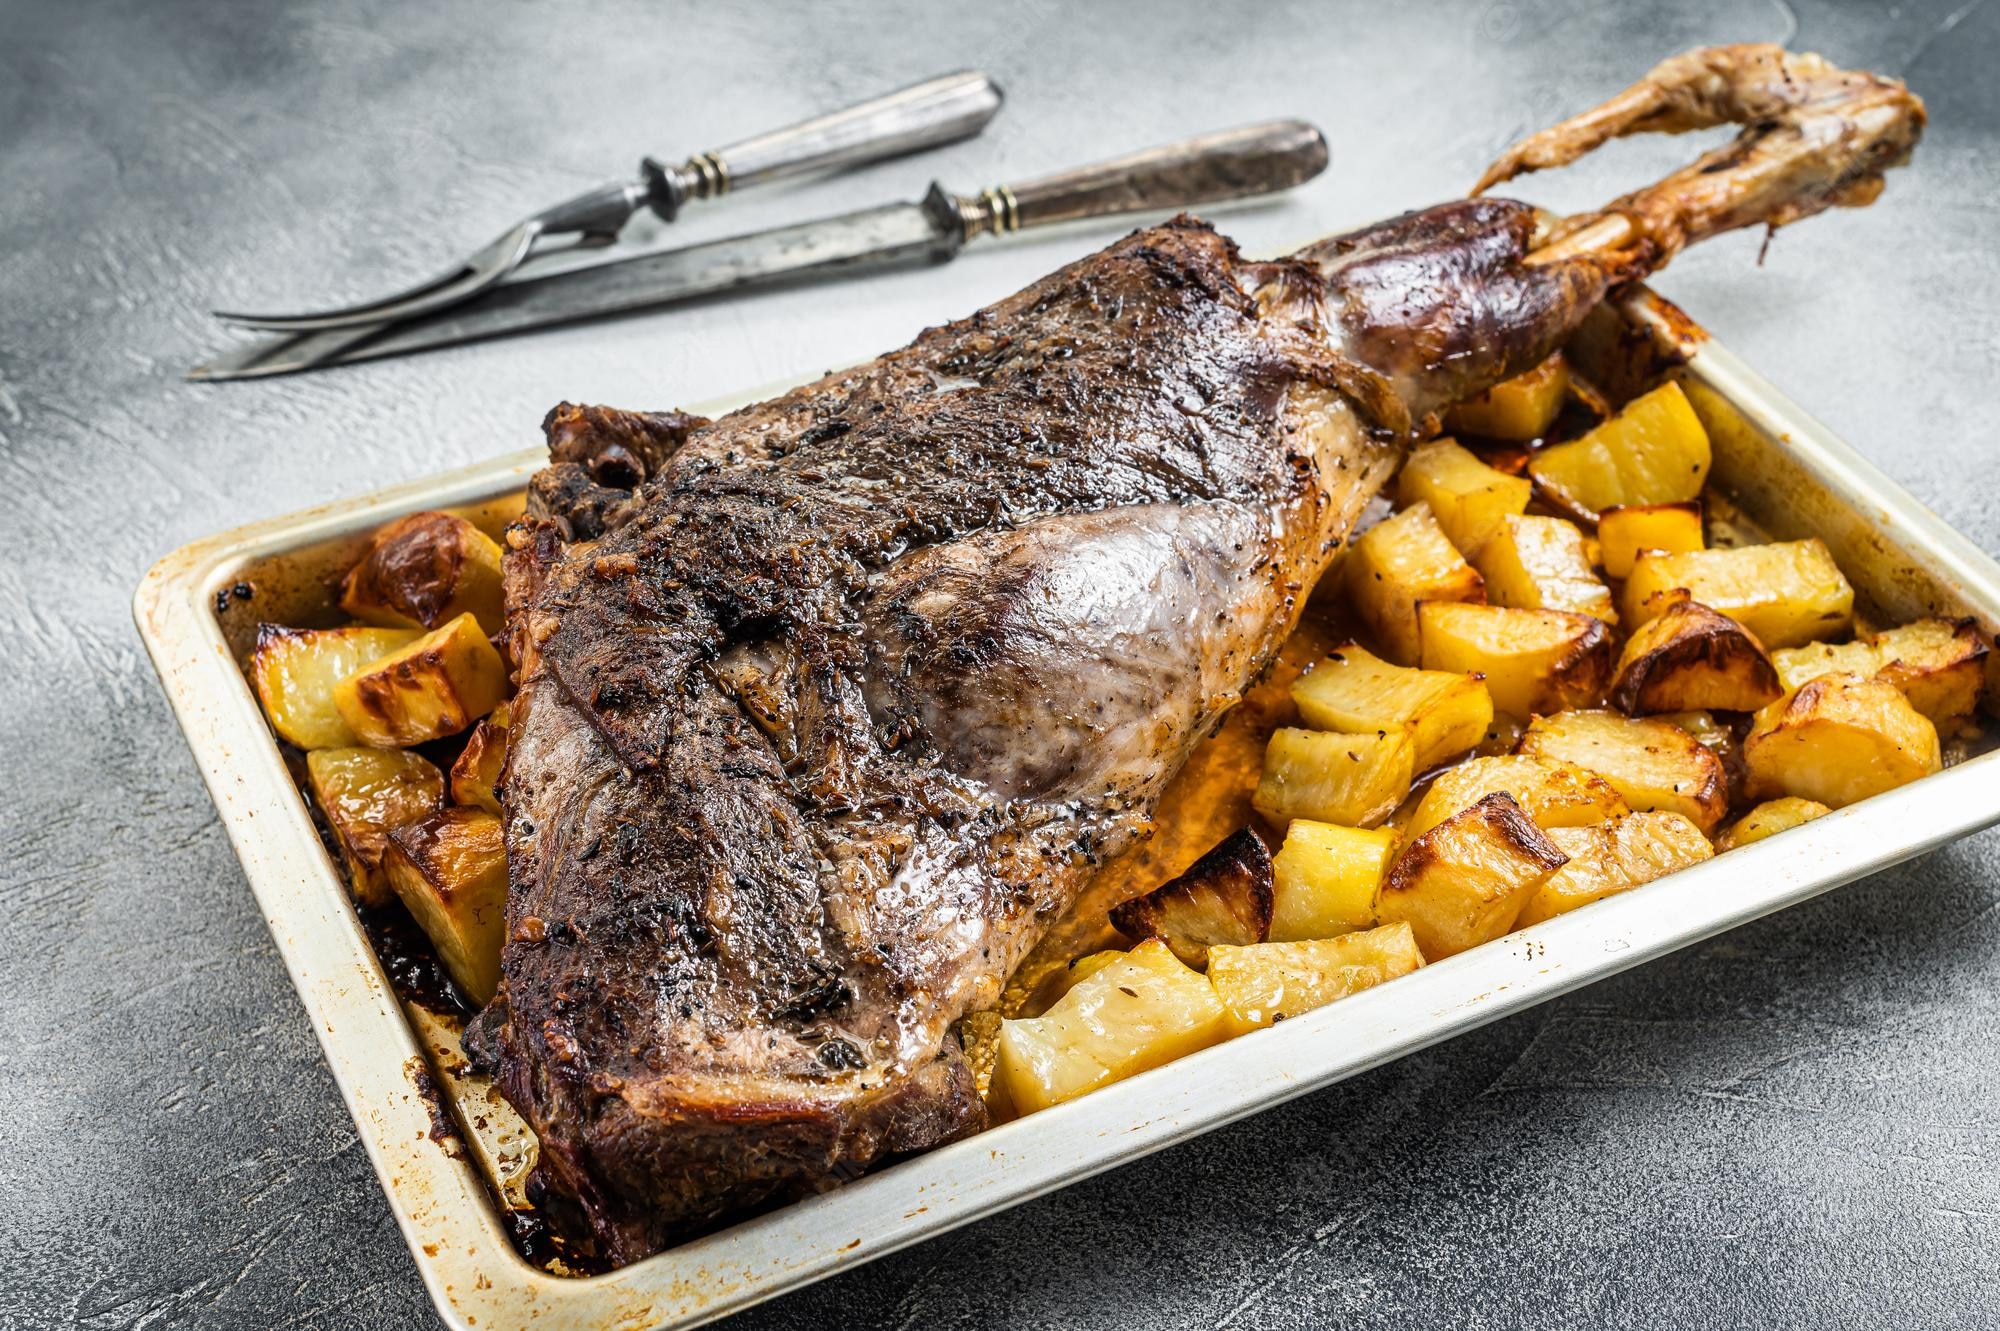 roast-lamb-mutton-leg-with-potatoes-rosemary-baking-dish-white-background-top-view_89816-37769.jpg